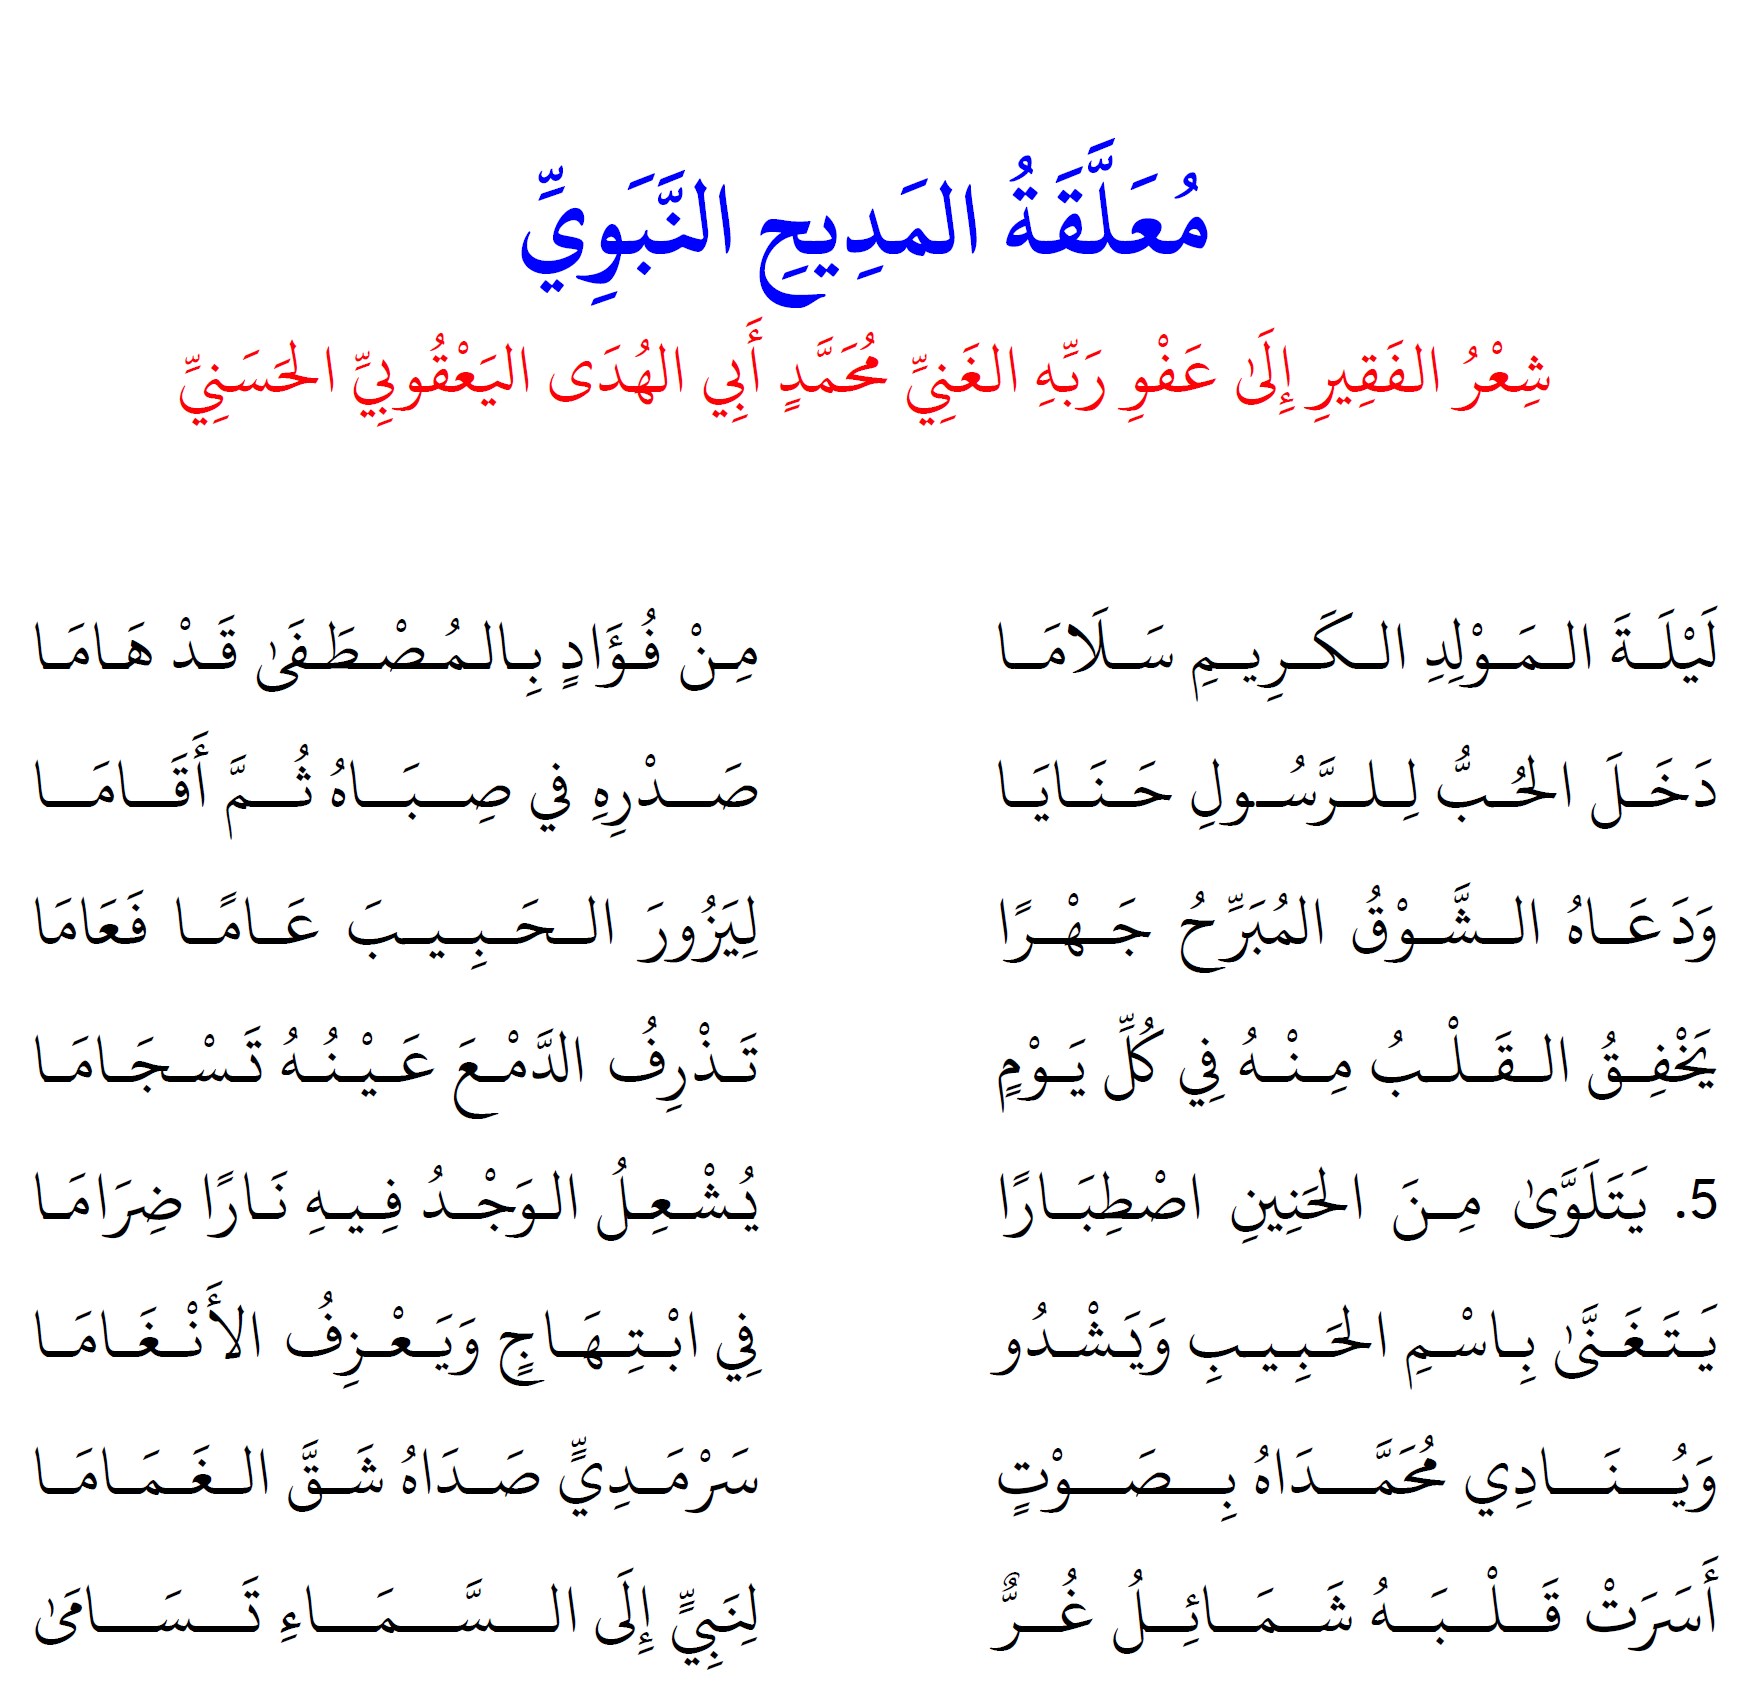 https://damas.nur.nu/wp-content/uploads/sites/8/2018/11/Mu3allaqatul-Madih-al-Nabawi_In-praise-of-the-Prophet-ar.jpg